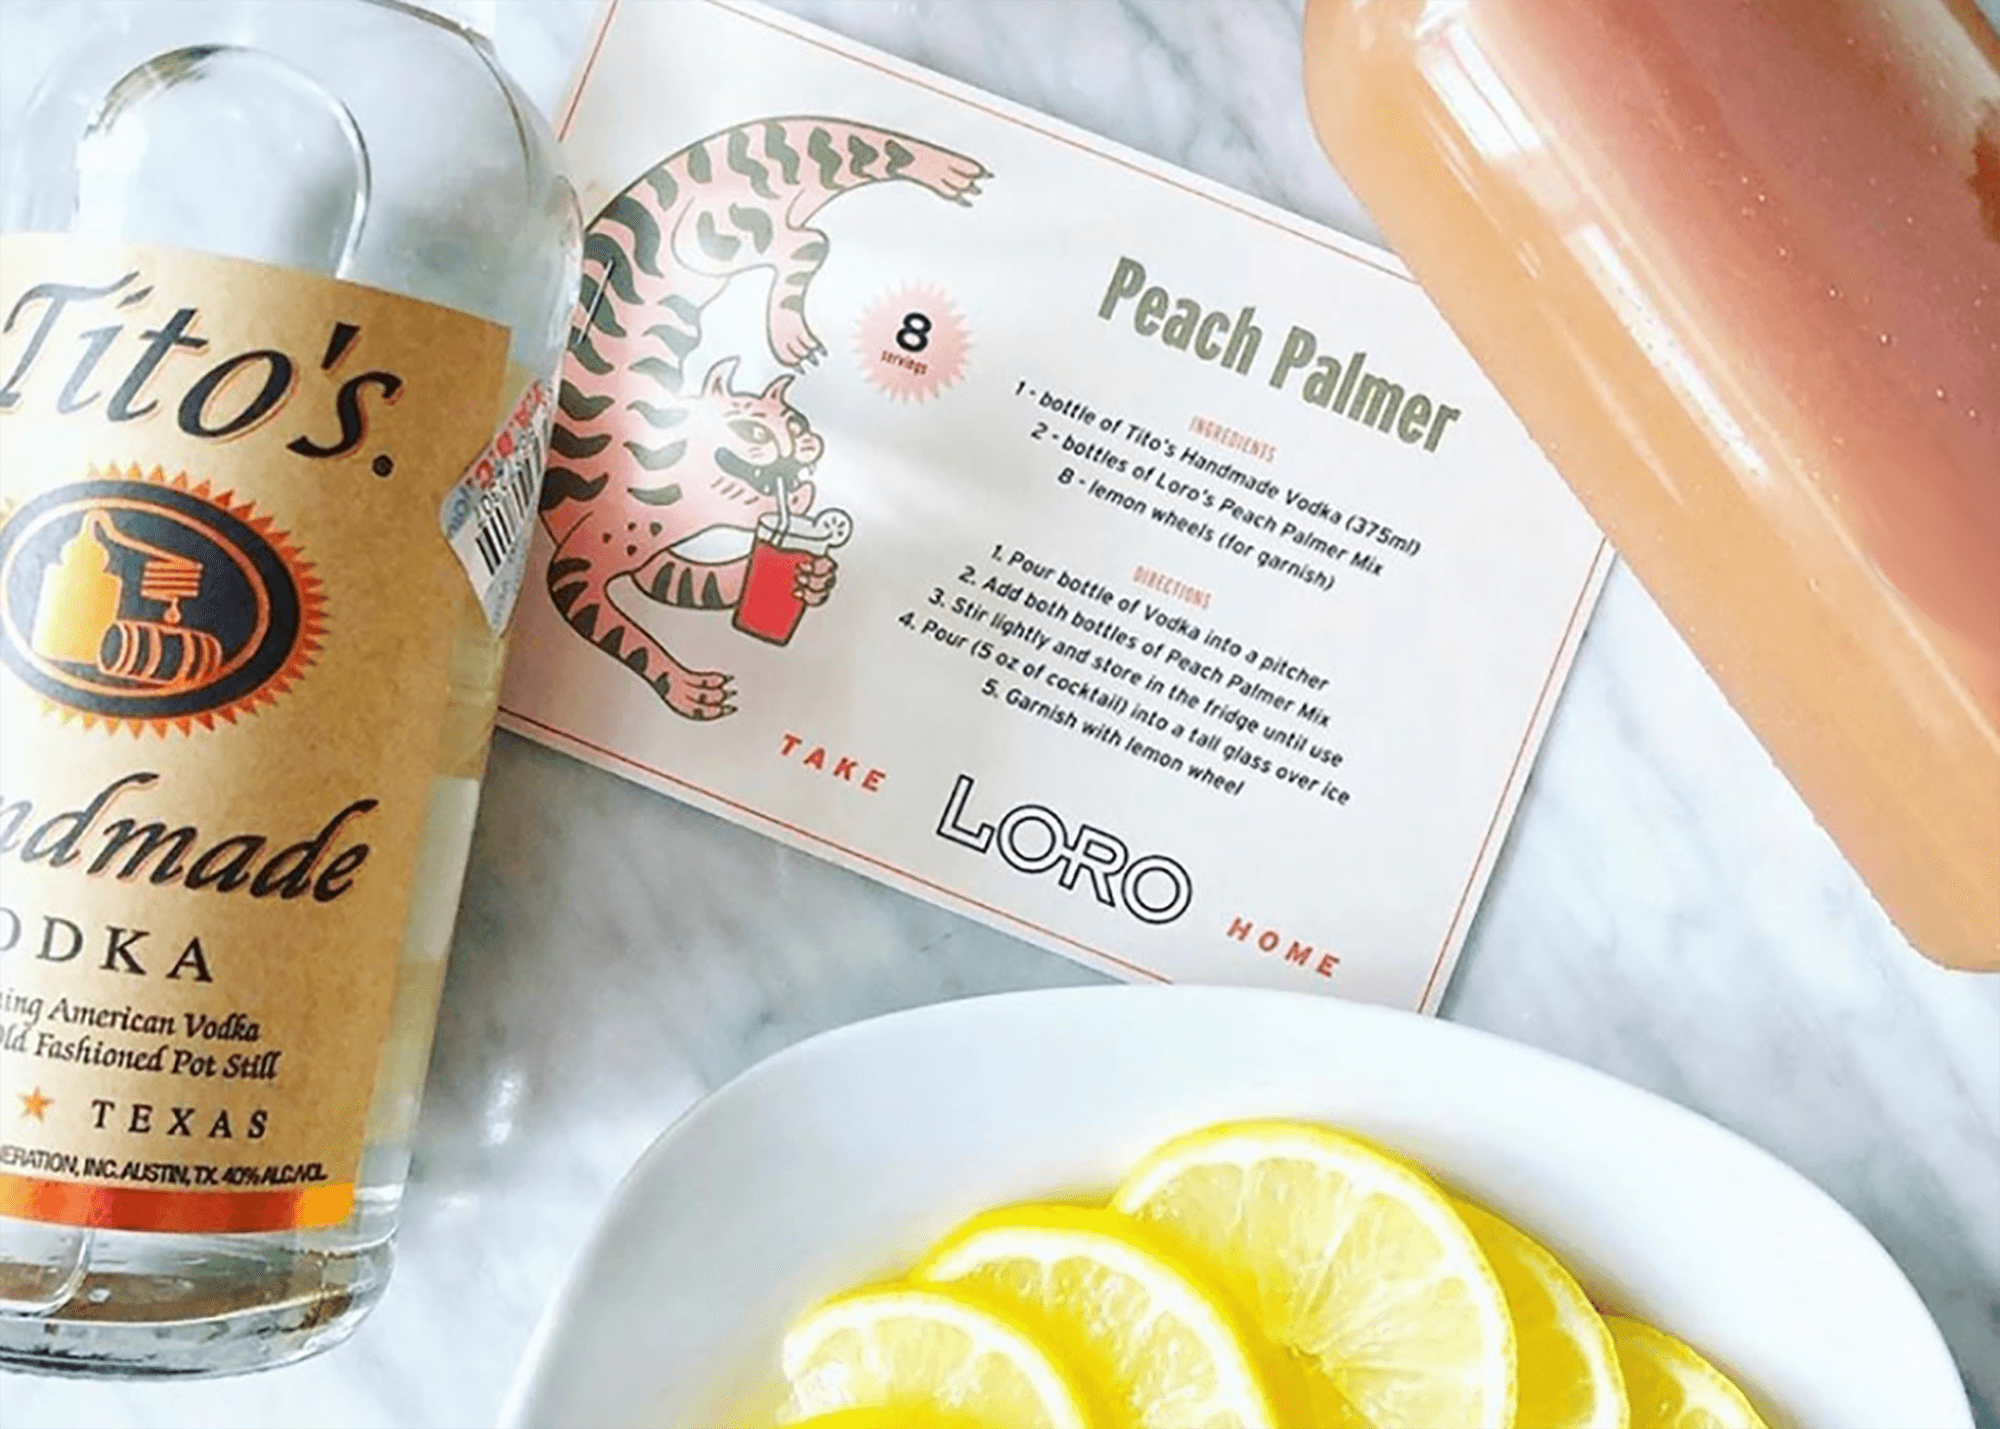 Peach Palmer drink kit